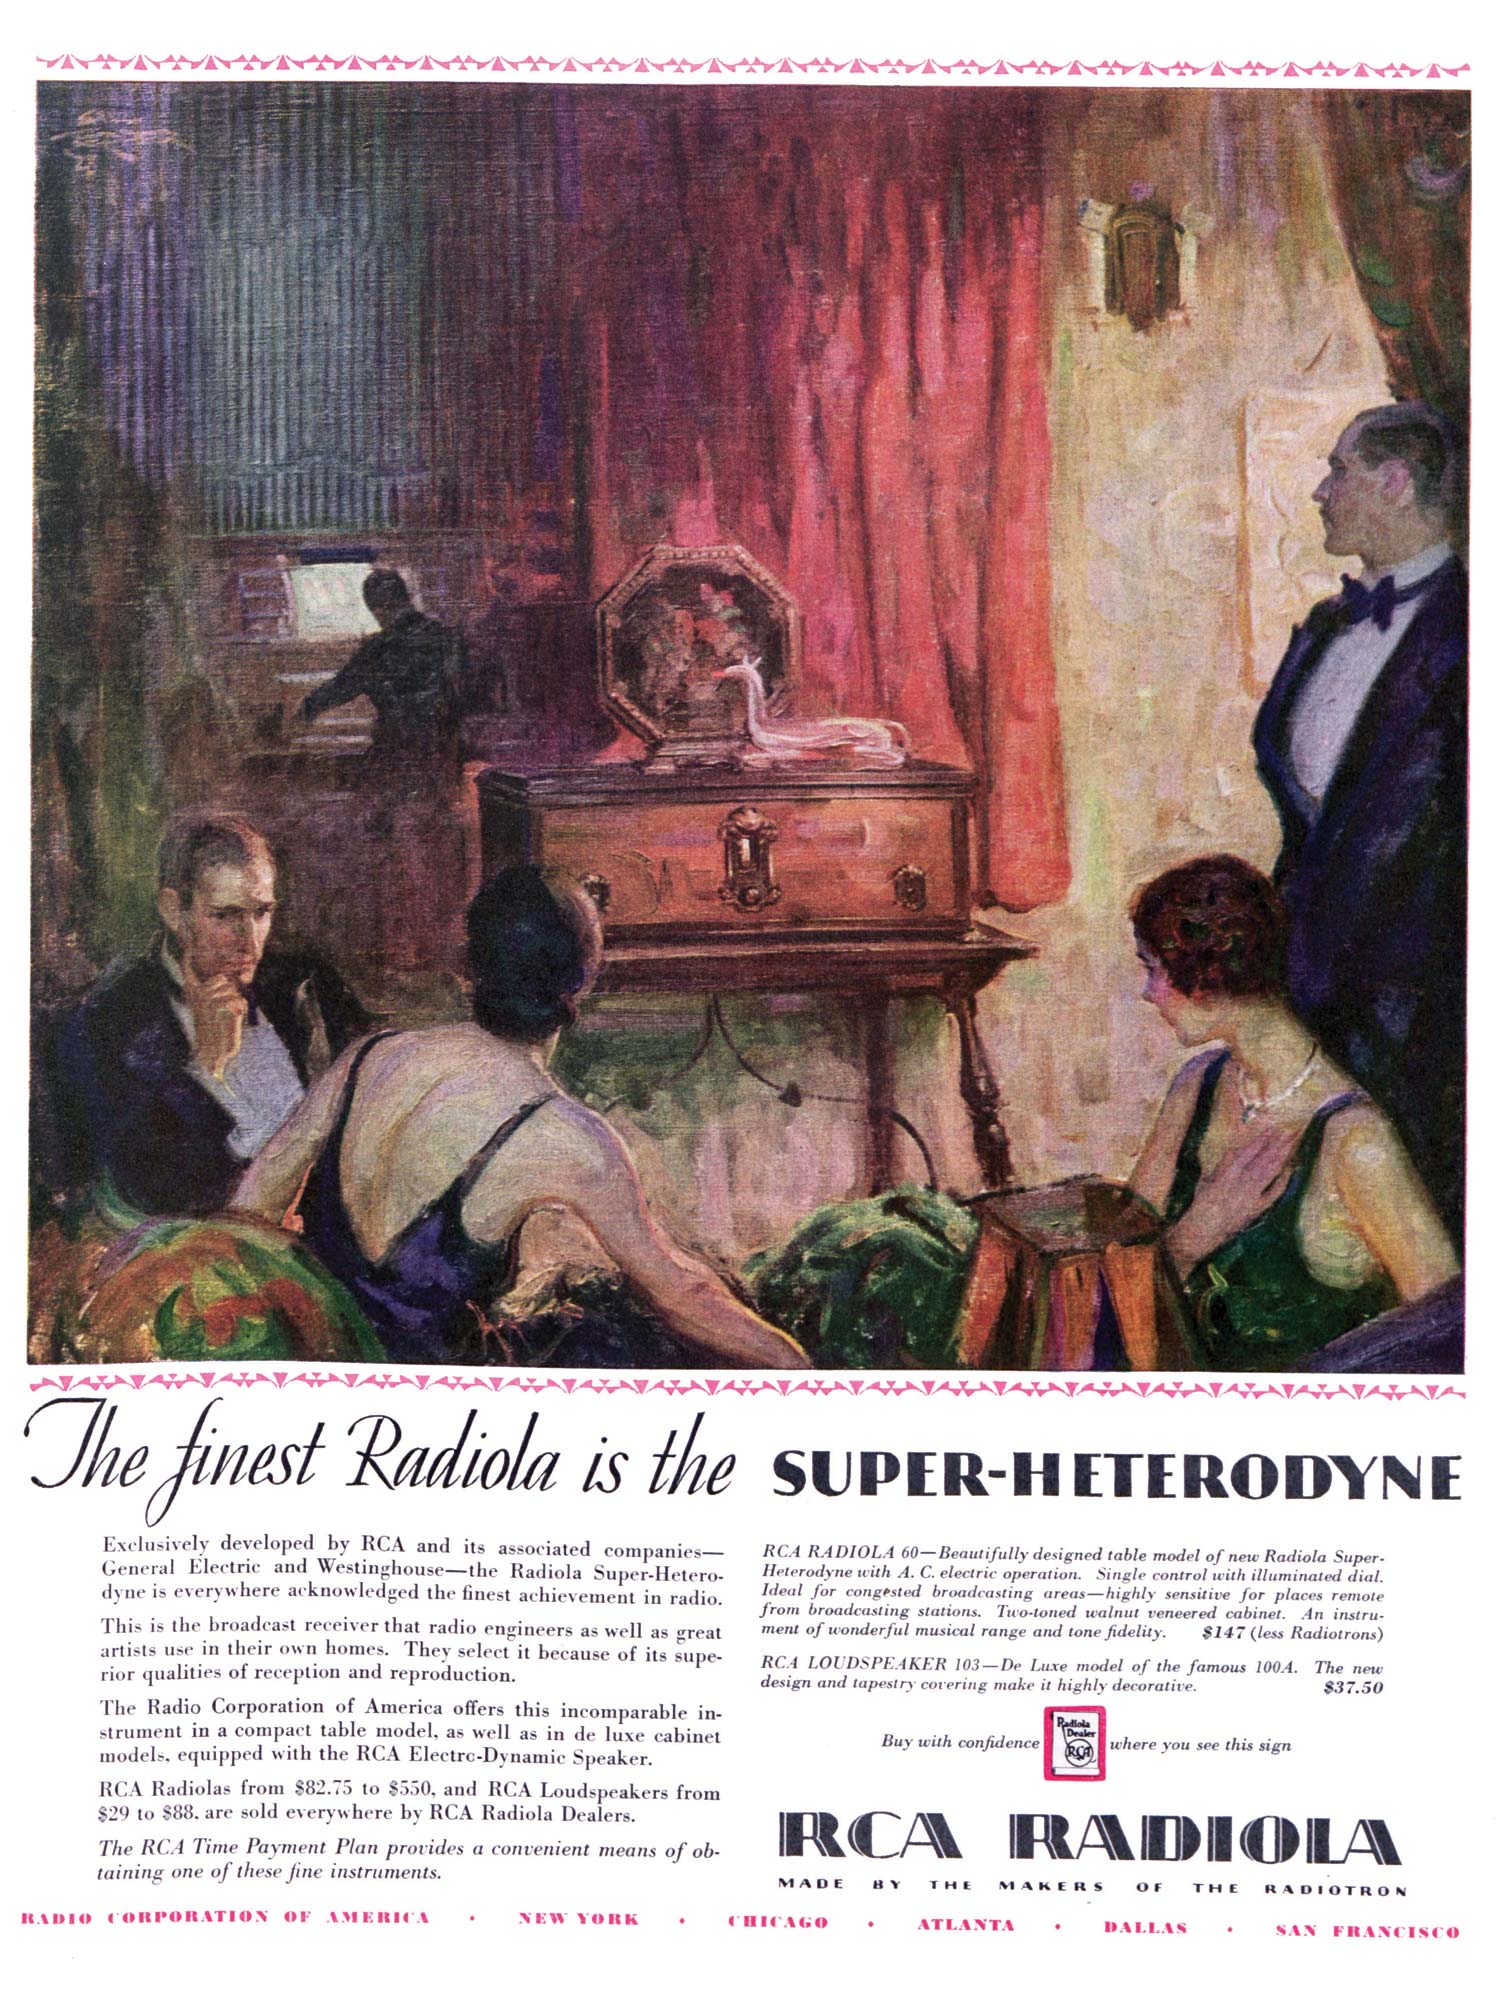 Vintage 1930s General Electric Radio Ad 